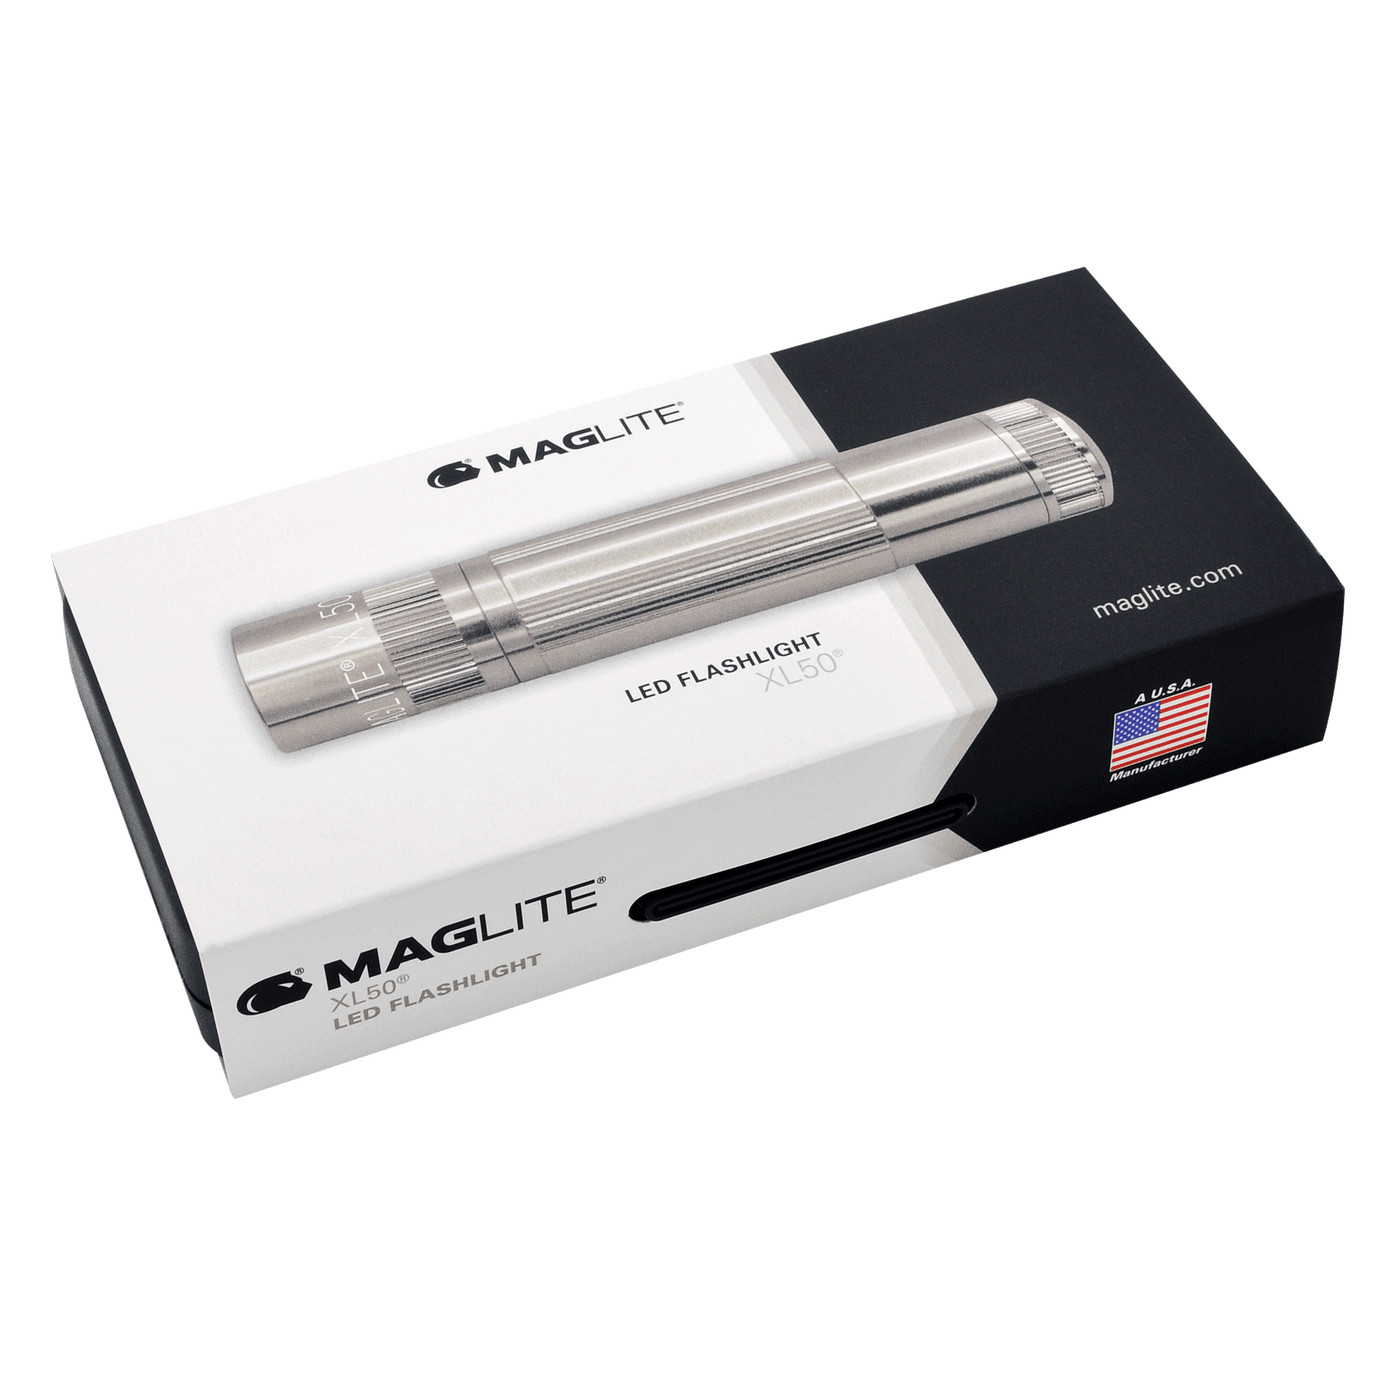 Maglite XL50 LED Pocket Flashlight Silver